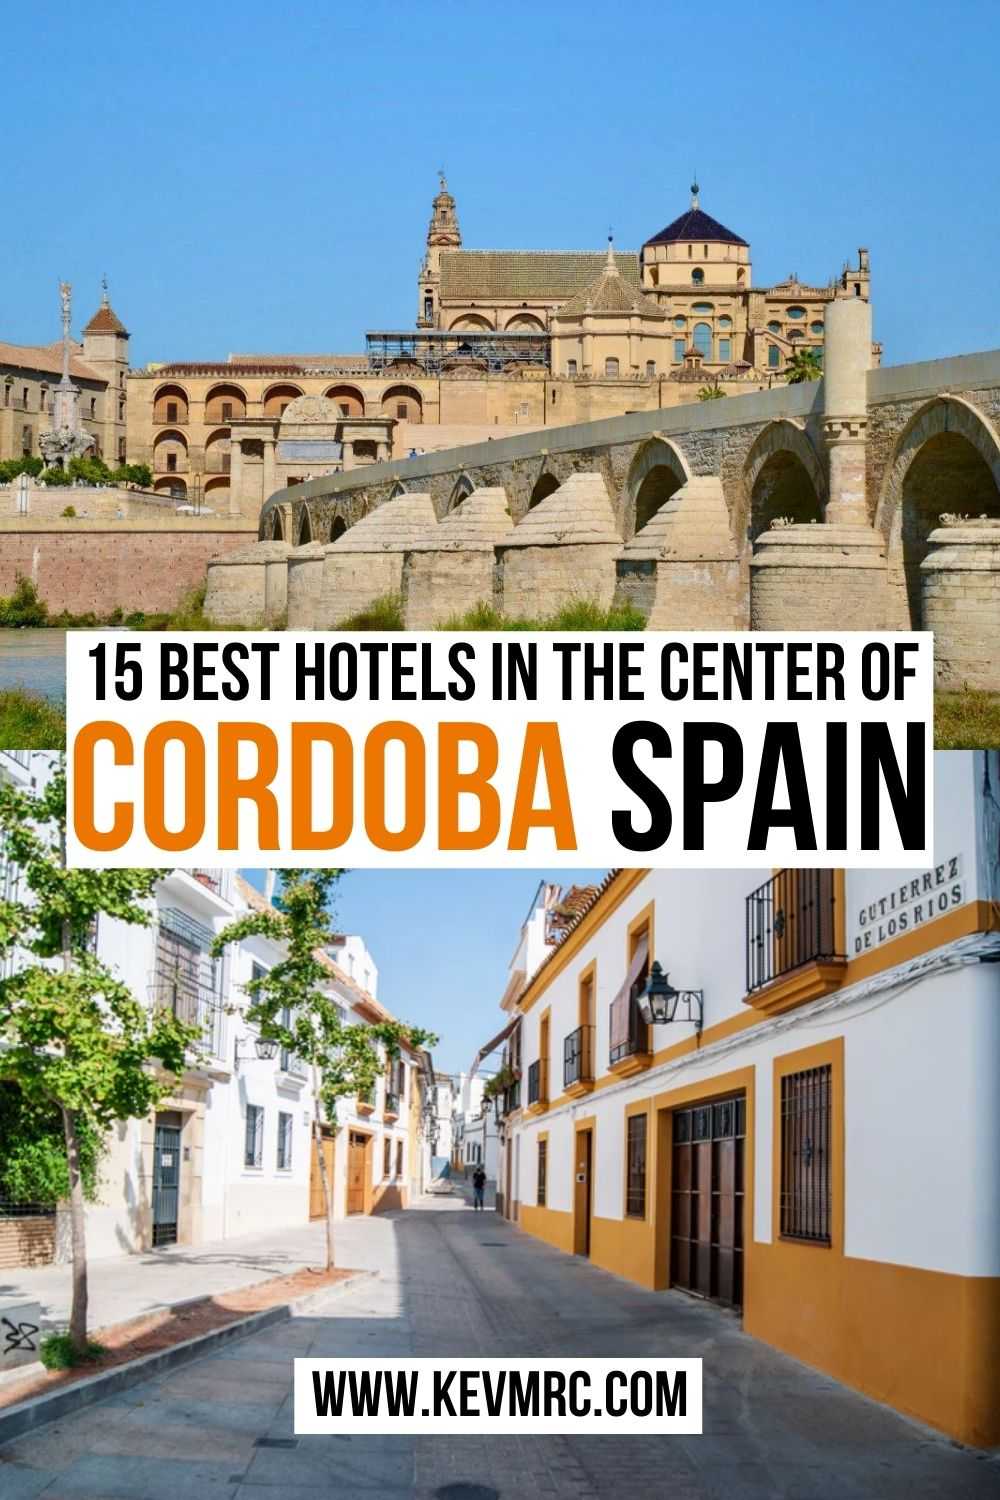 The Best Hotels in Cordoba City Center. cordoba spain travel | cordoba travel | cordoba old town | cordoba best hotels